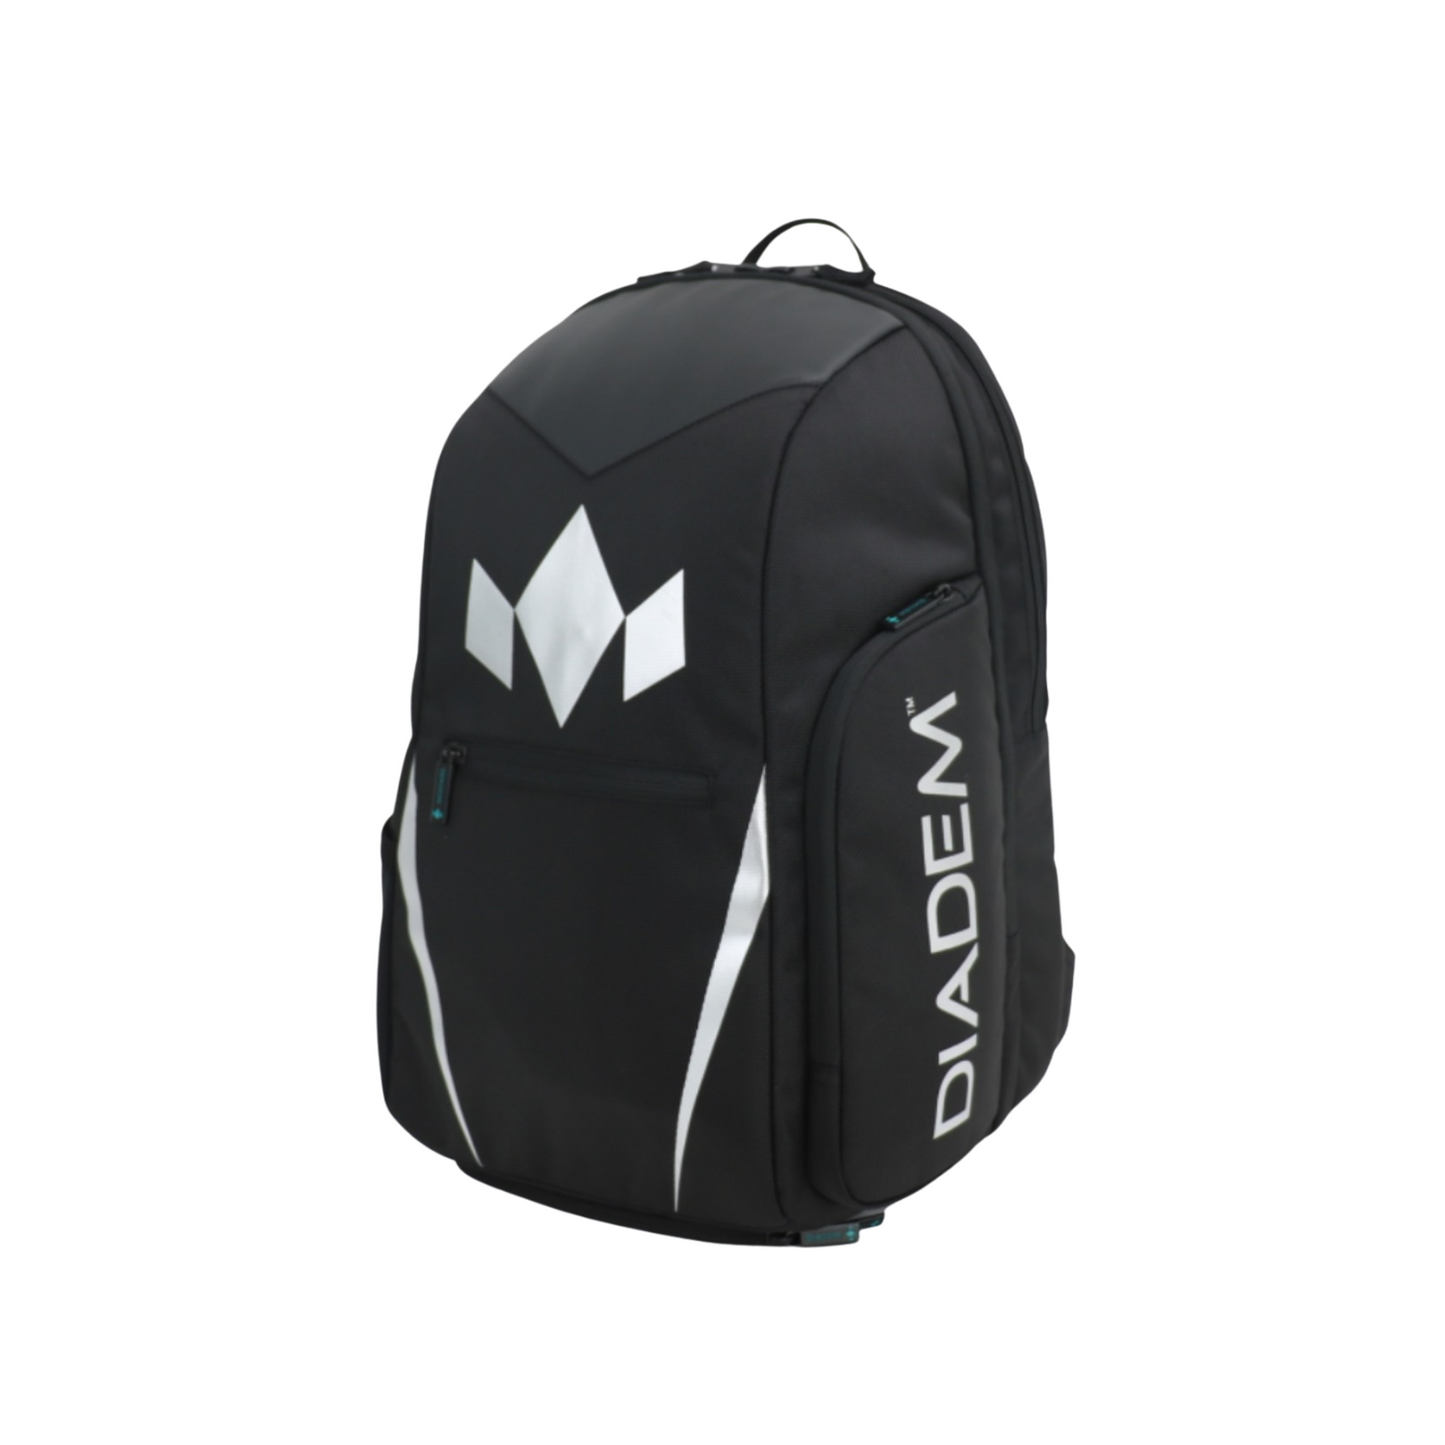 Diadem Tour v3 Backpack by Diadem Sports